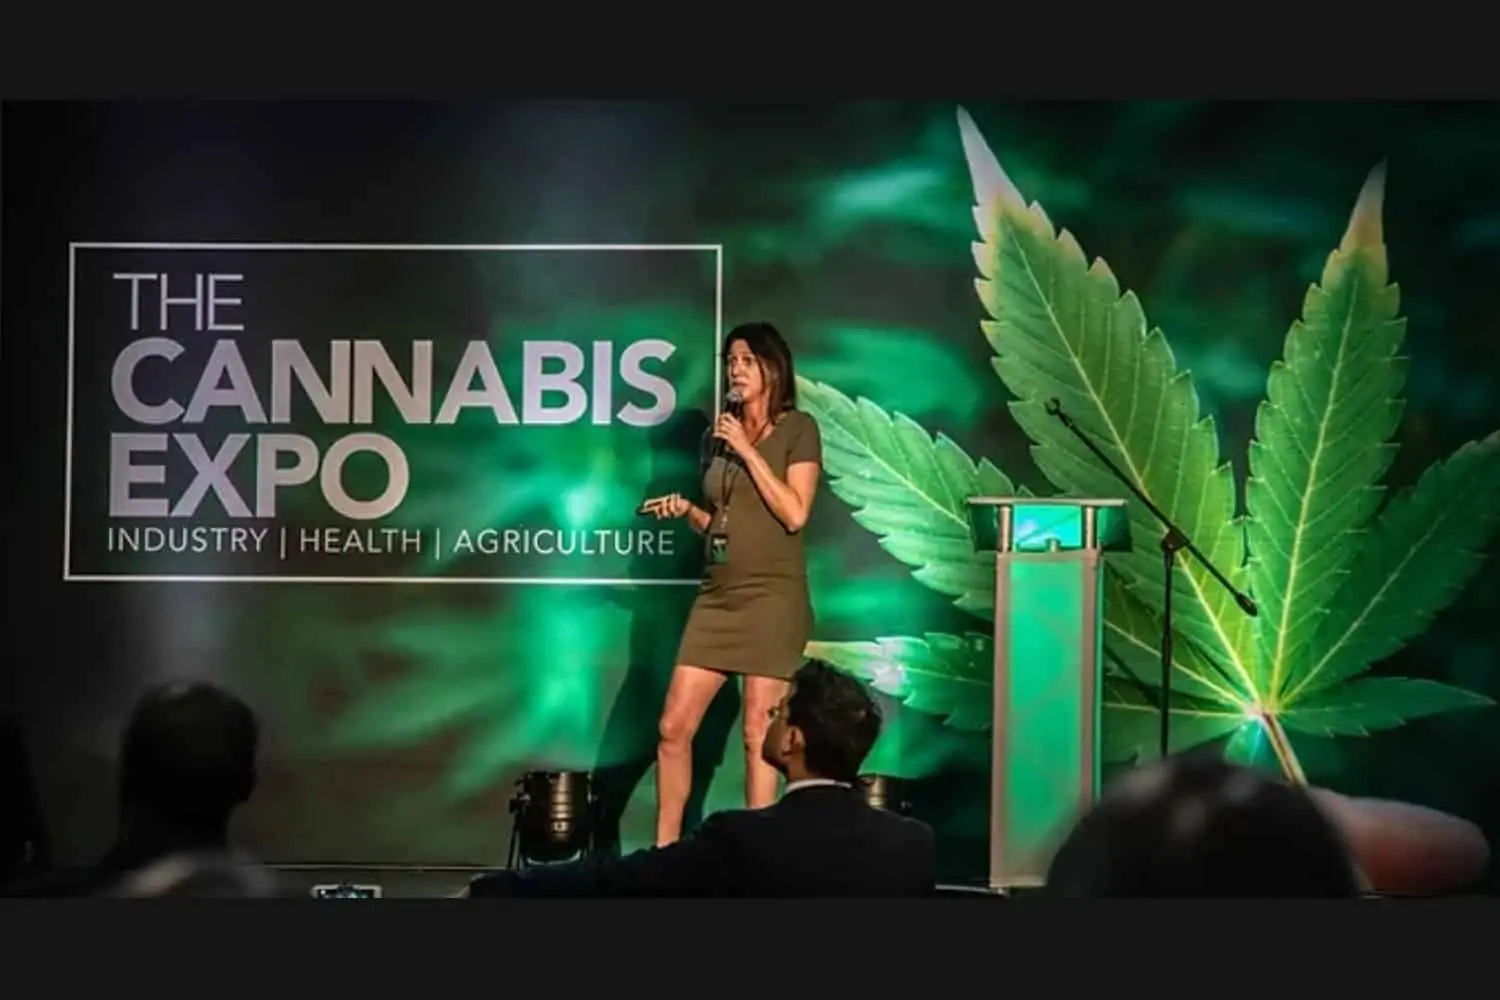 The 2021 Cannabis Expo kicks off today in Johannesburg